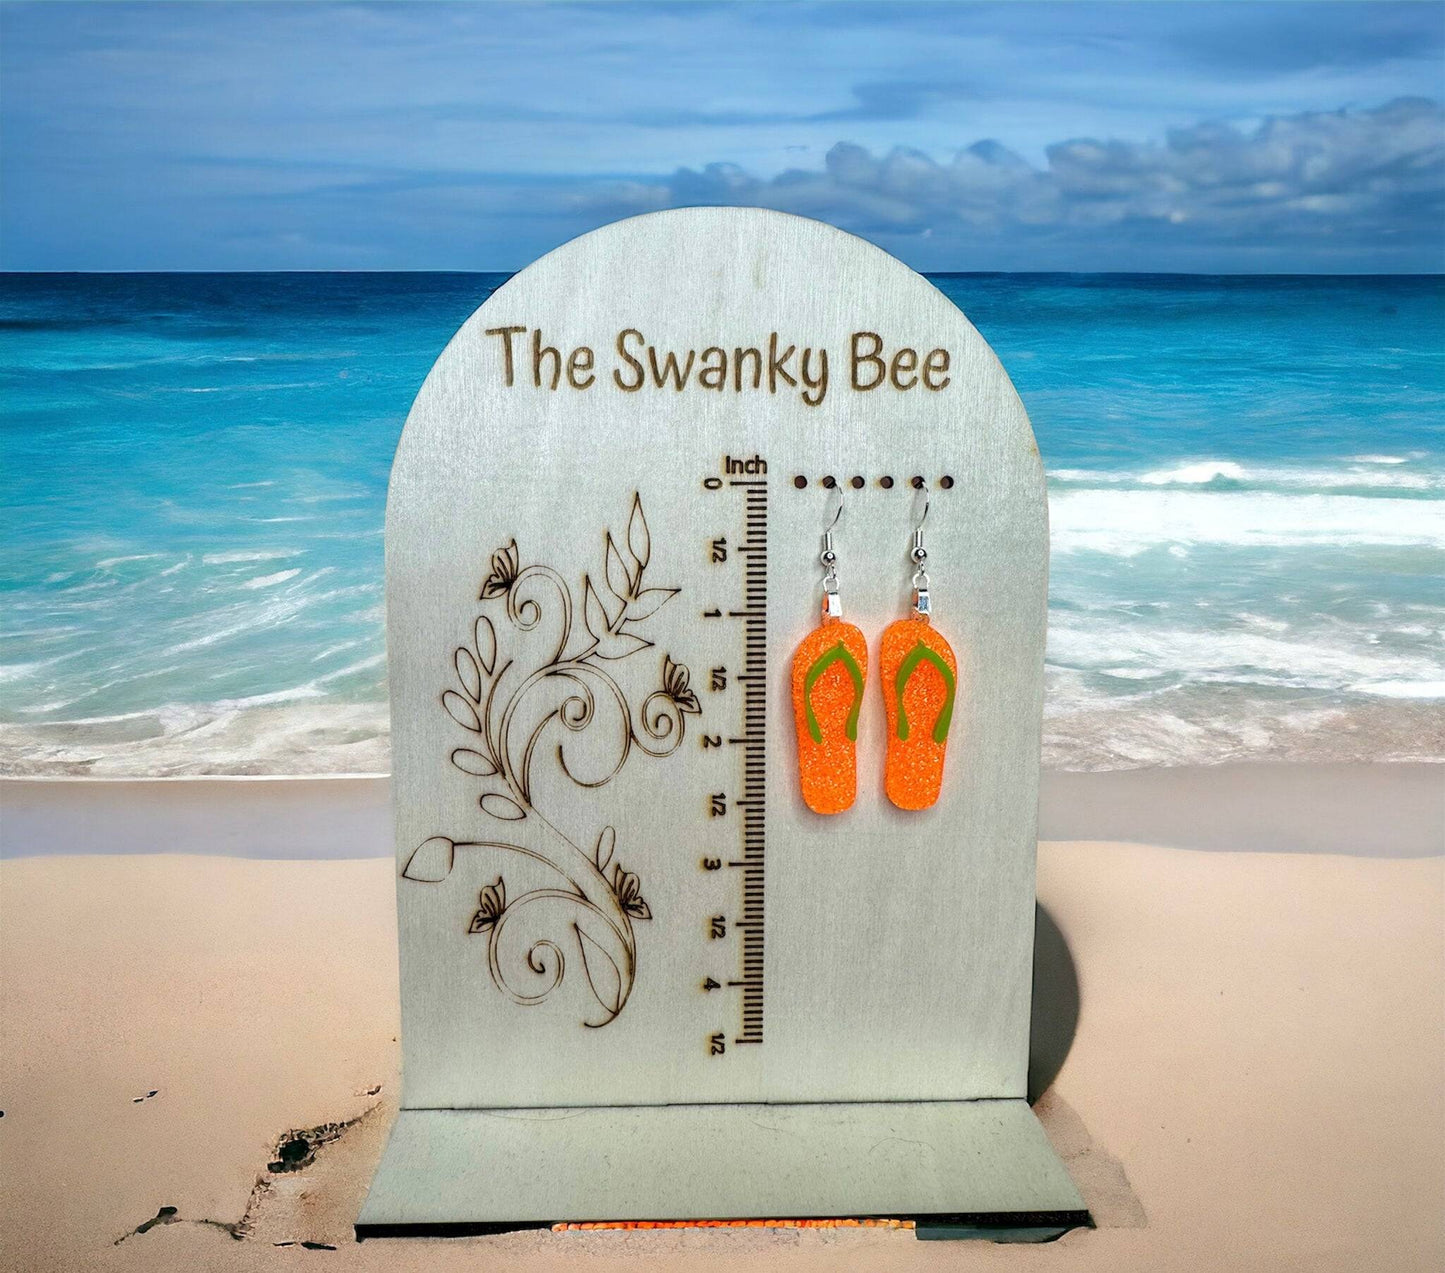 Glitter Flip Flop Earrings - Fun Beach Jewelry - Sparkly Summer Accessories - Handmade Beachwear - Cute Vacation Earrings